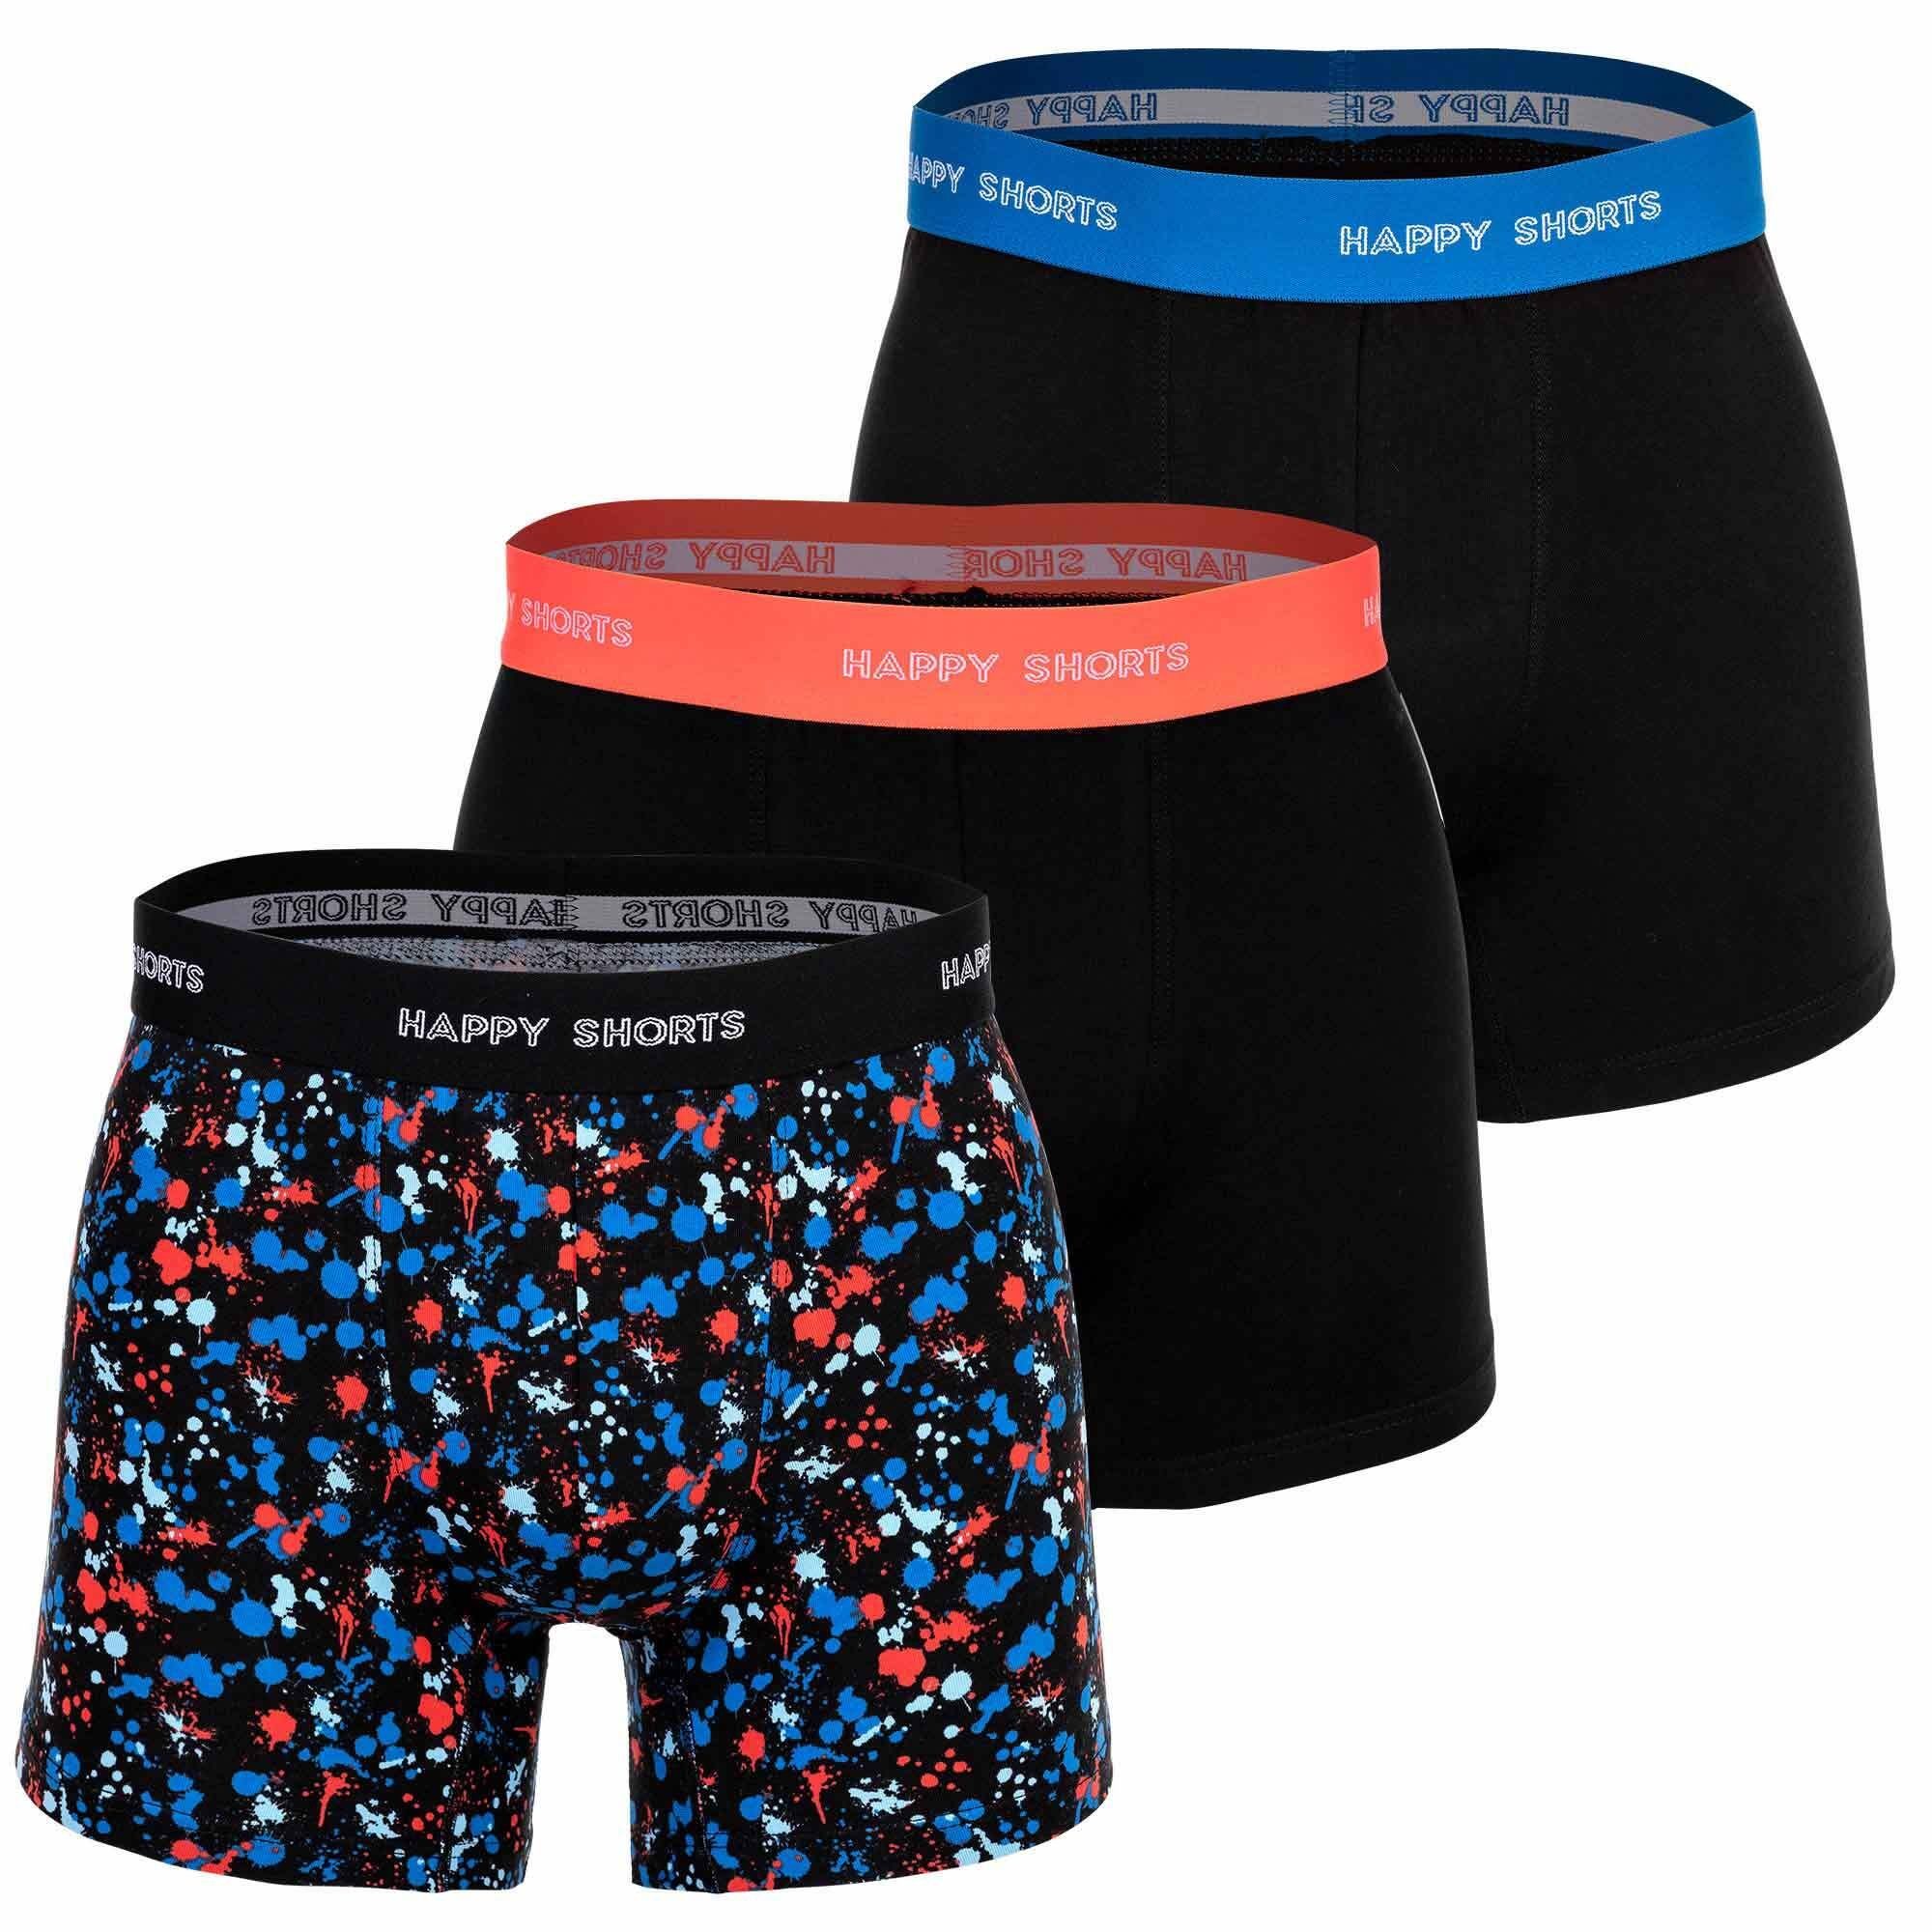 HAPPY SHORTS Boxer Herren Boxershorts, Retro Neon Colour Splashes 3er Pack - Jersey